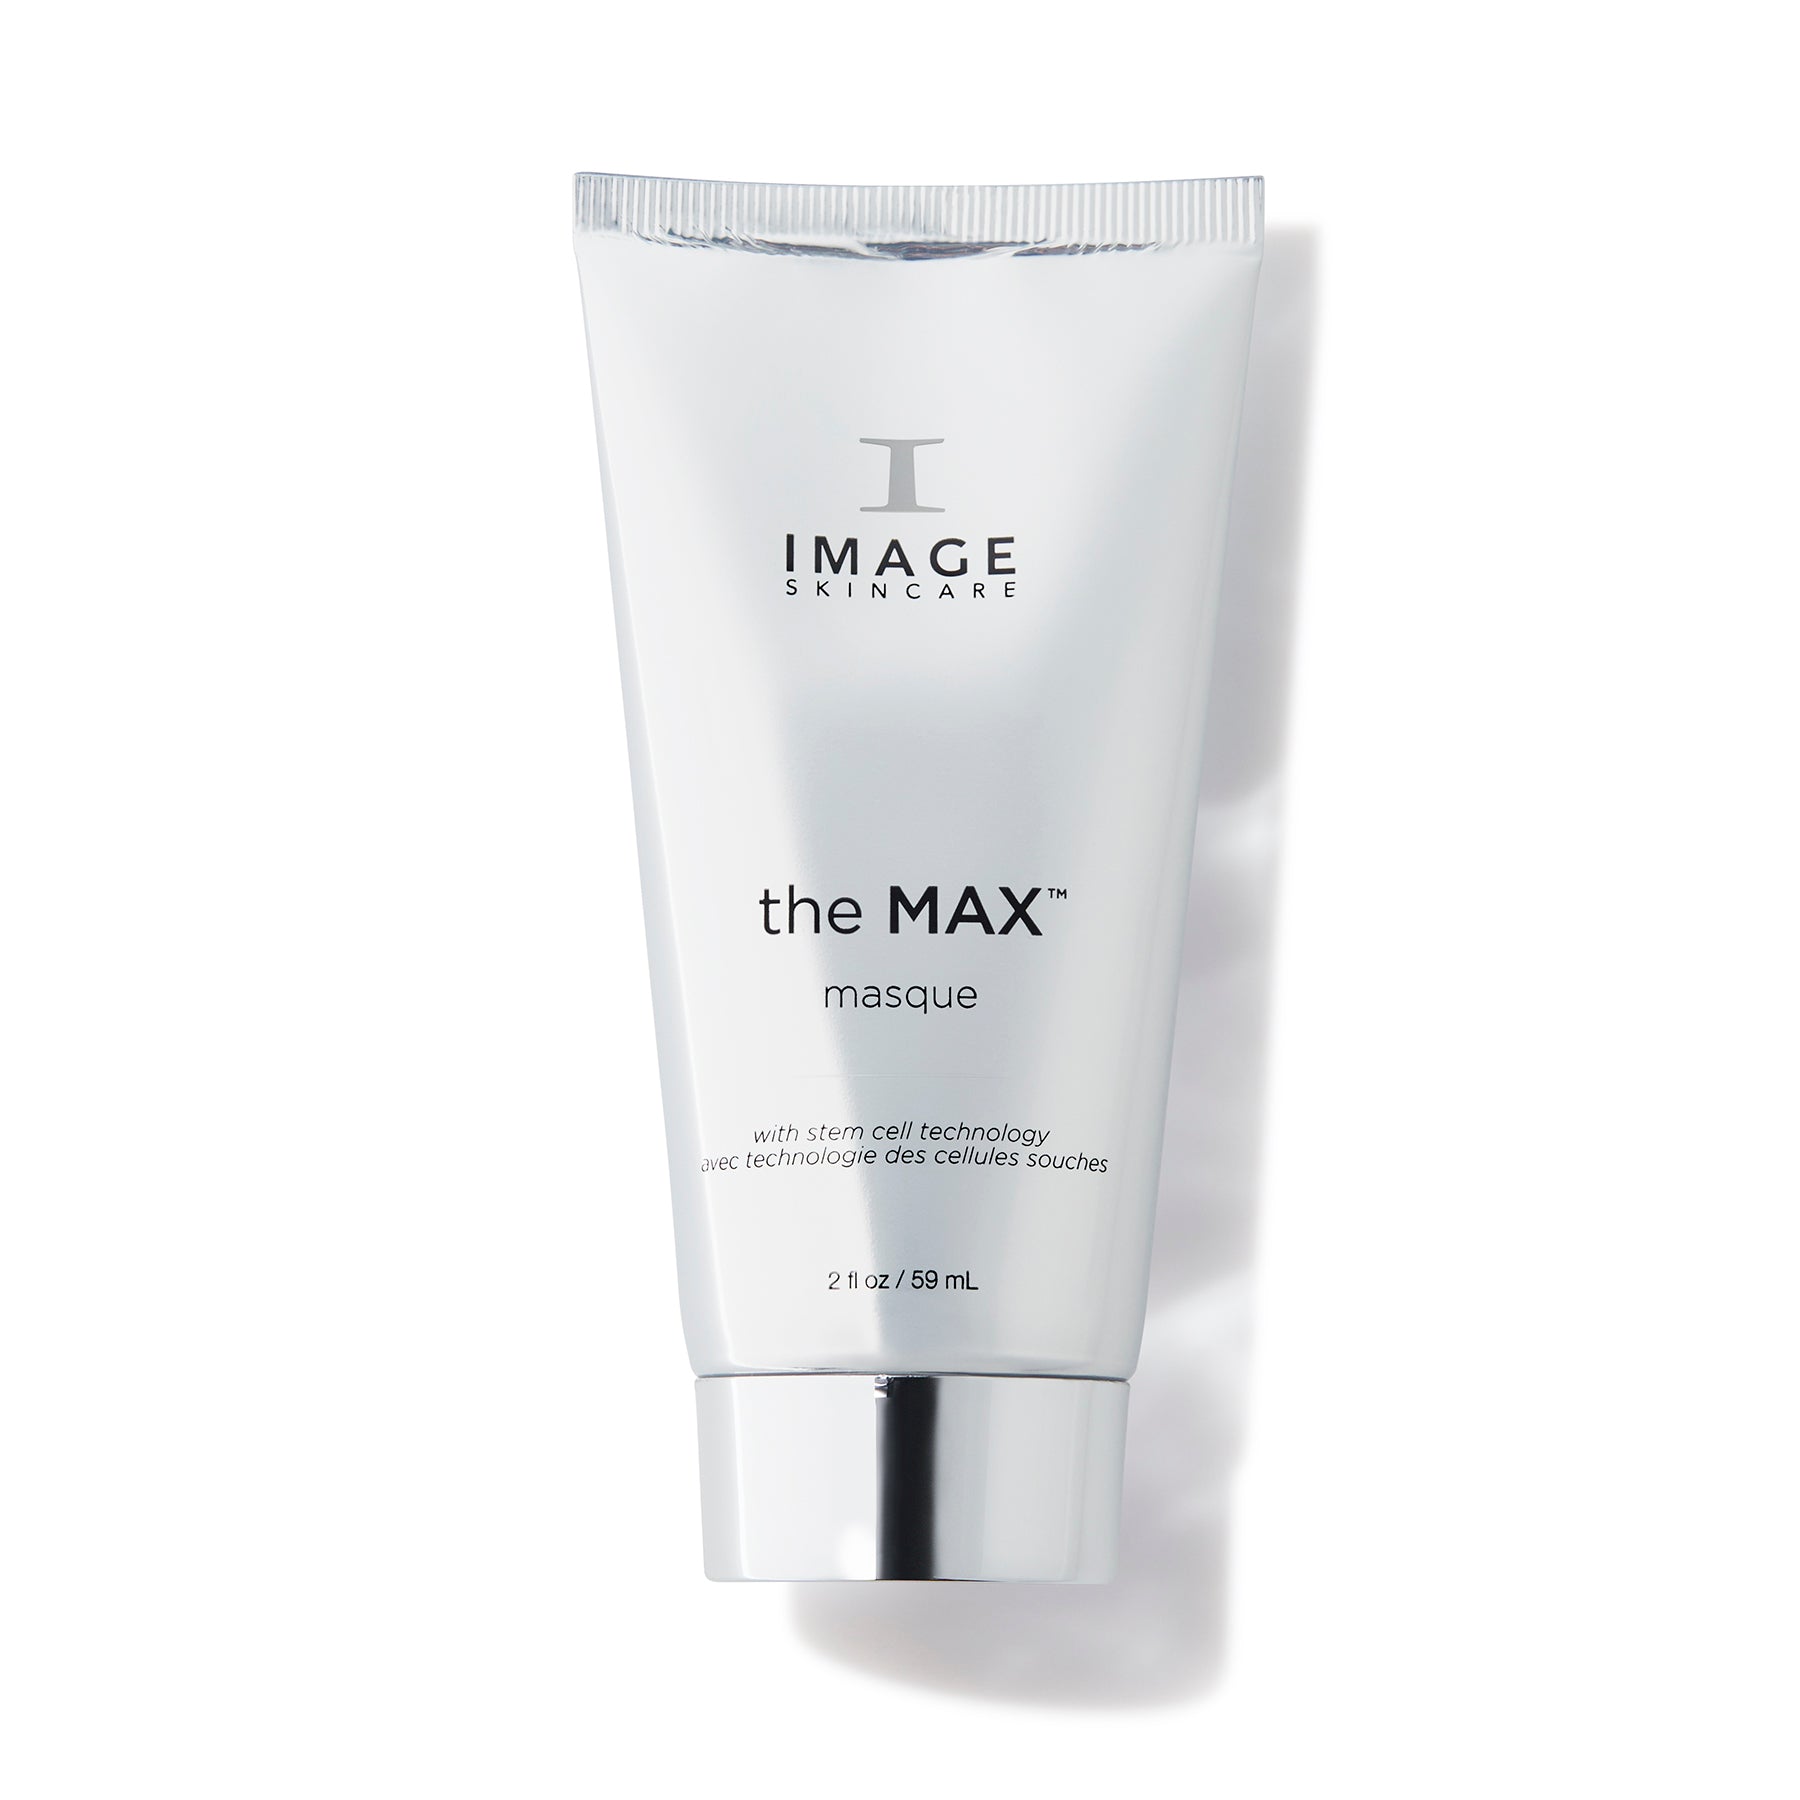 IMAGE Skincare the Max Masque